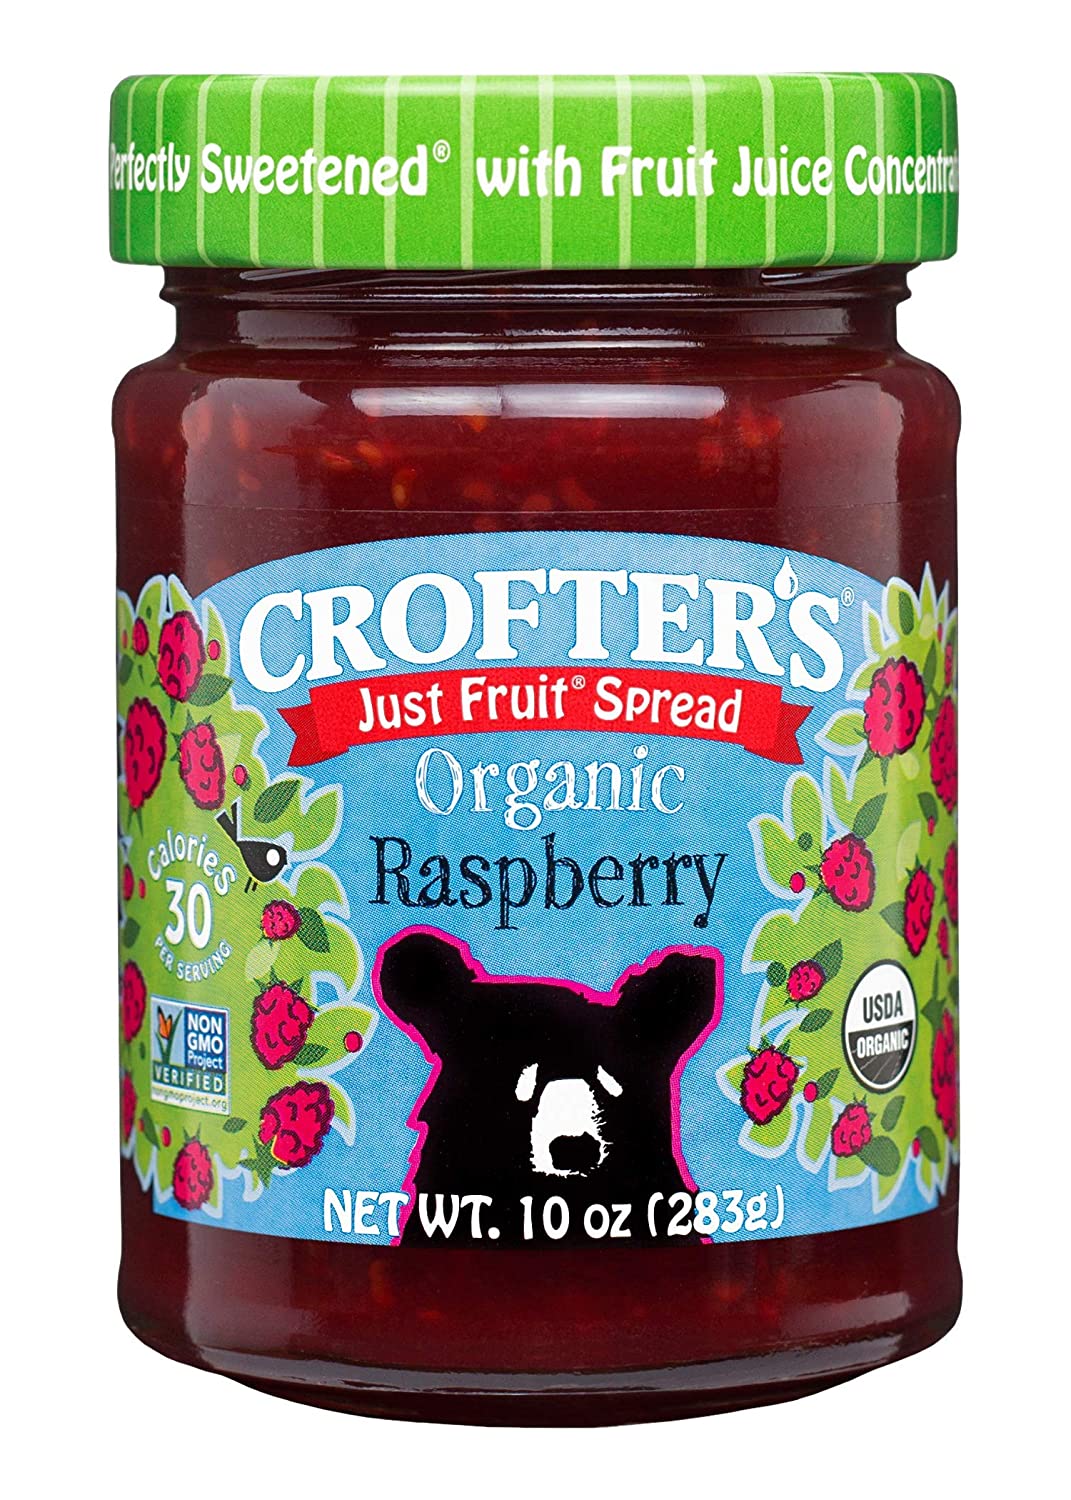 Sugar-Free Raspberry Jam